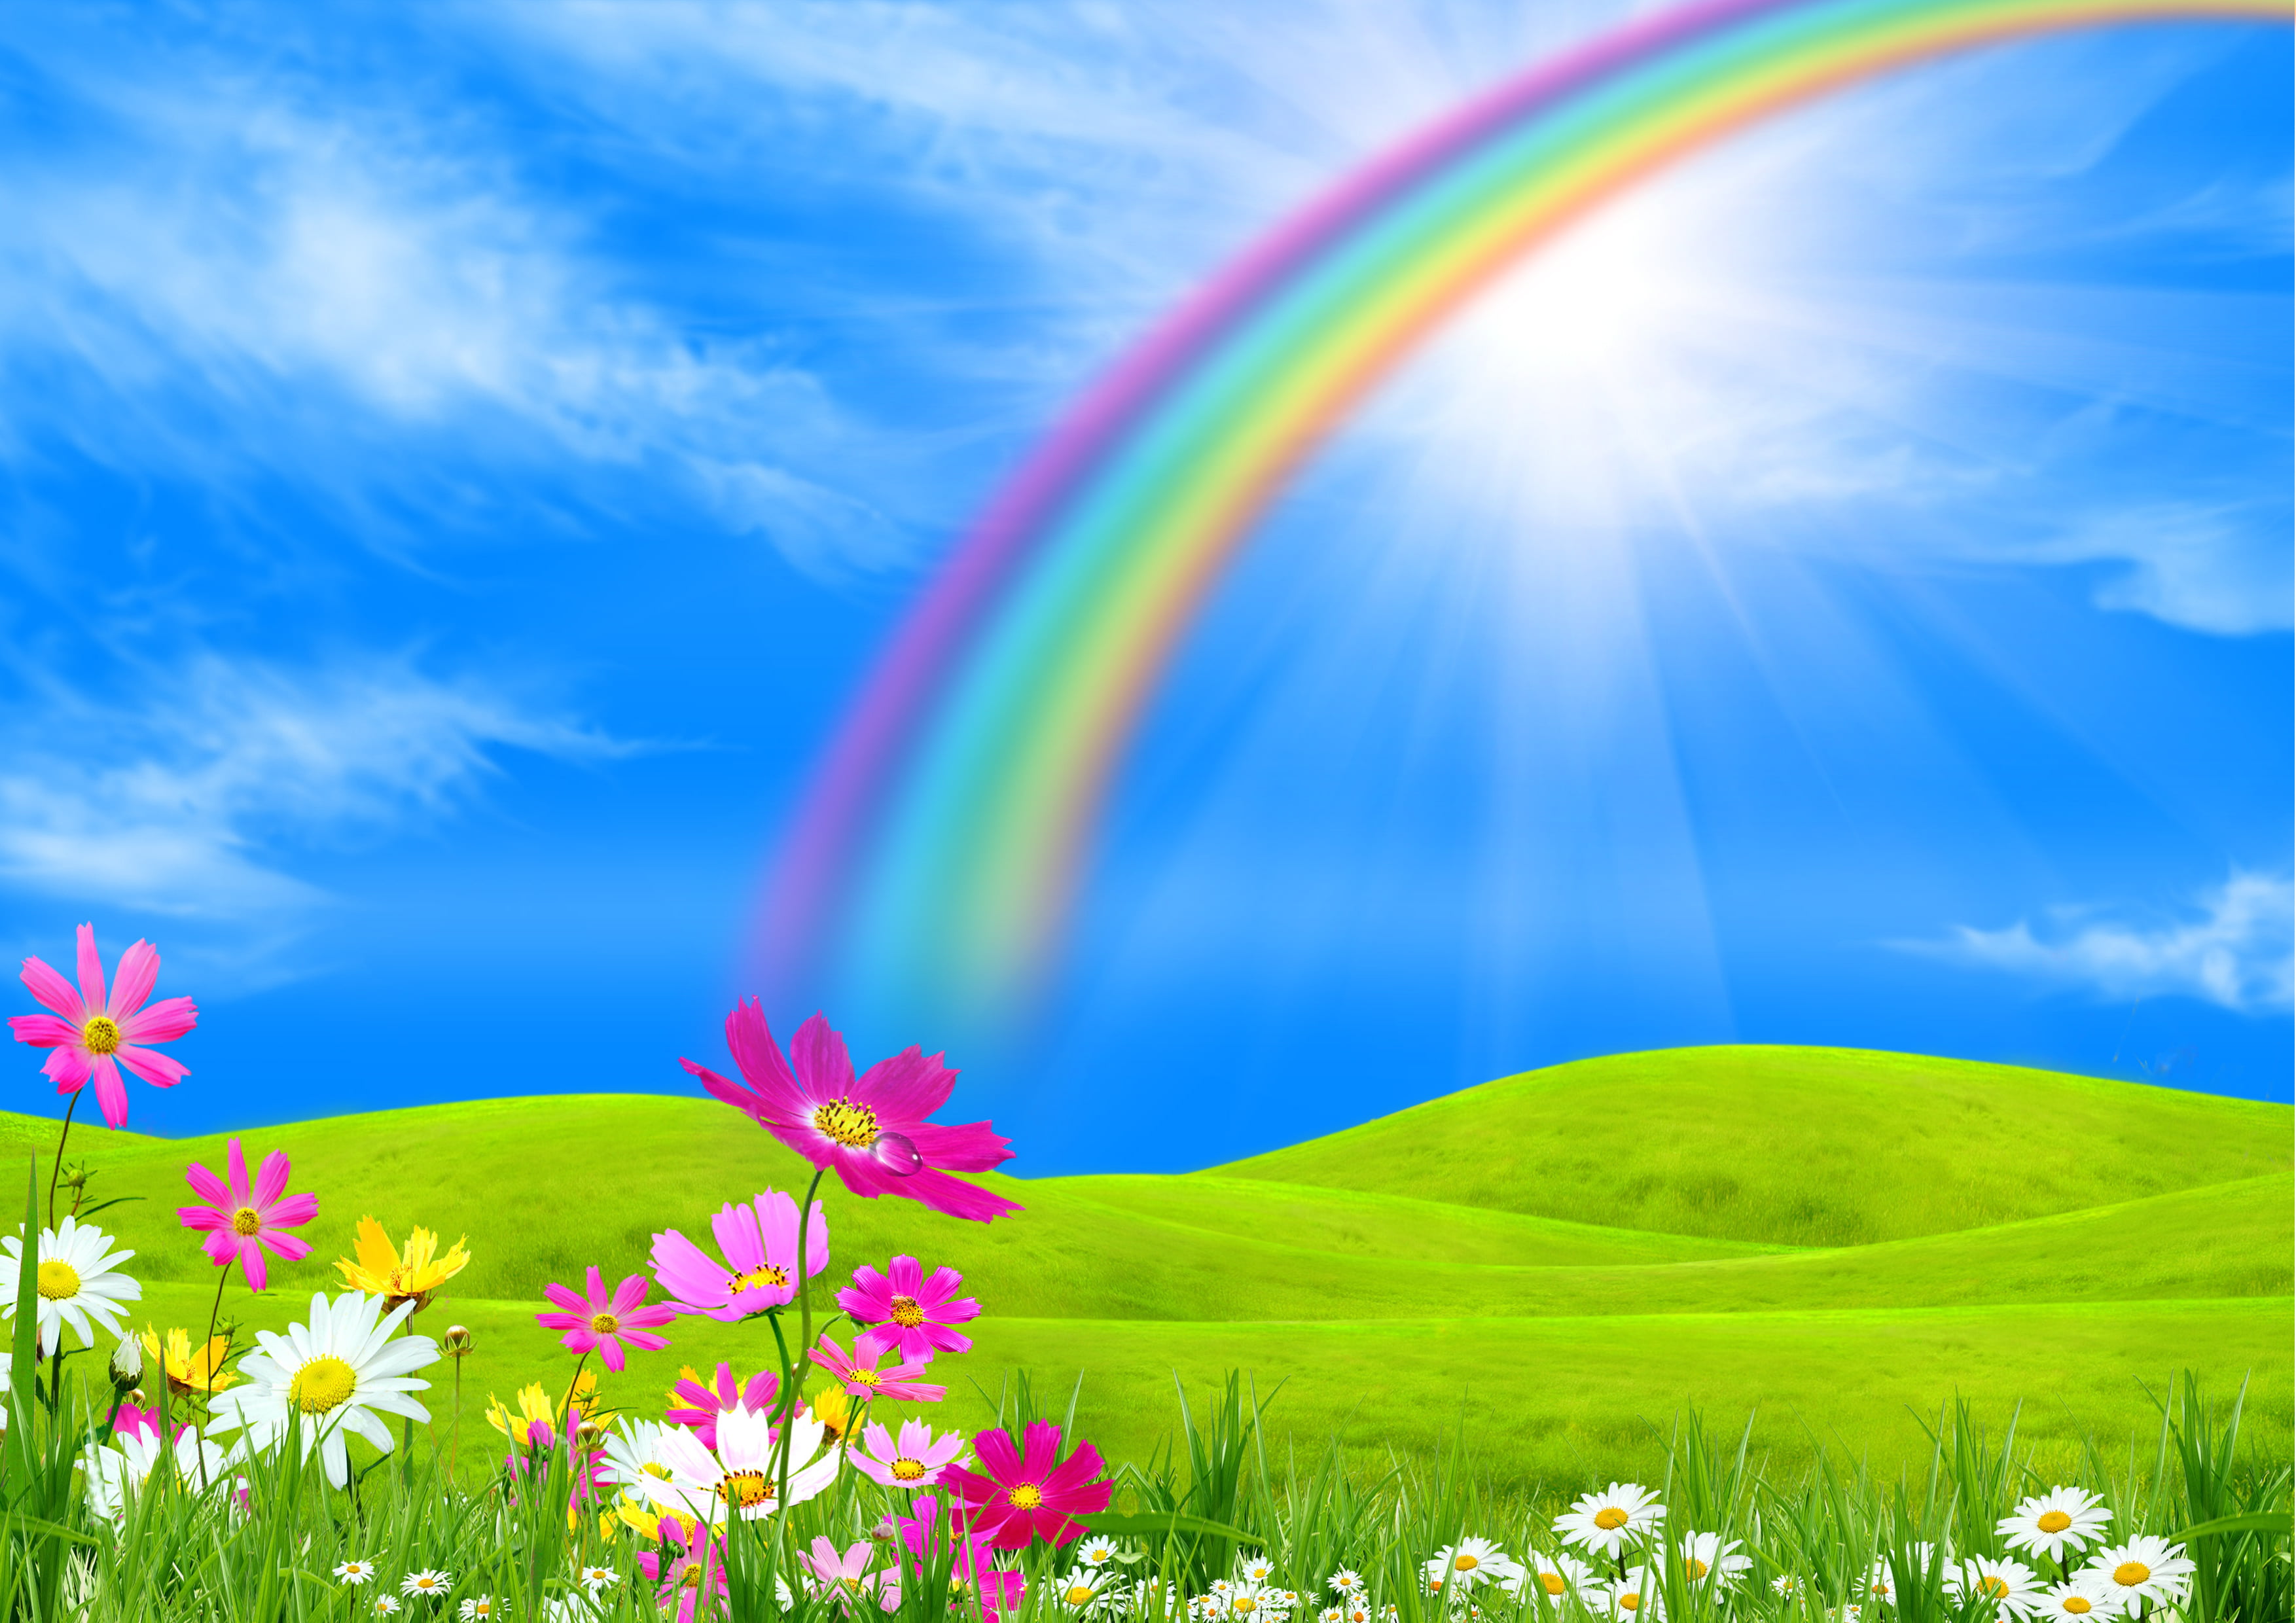 flowers and rainbow illustration, field, trees, landscape, nature